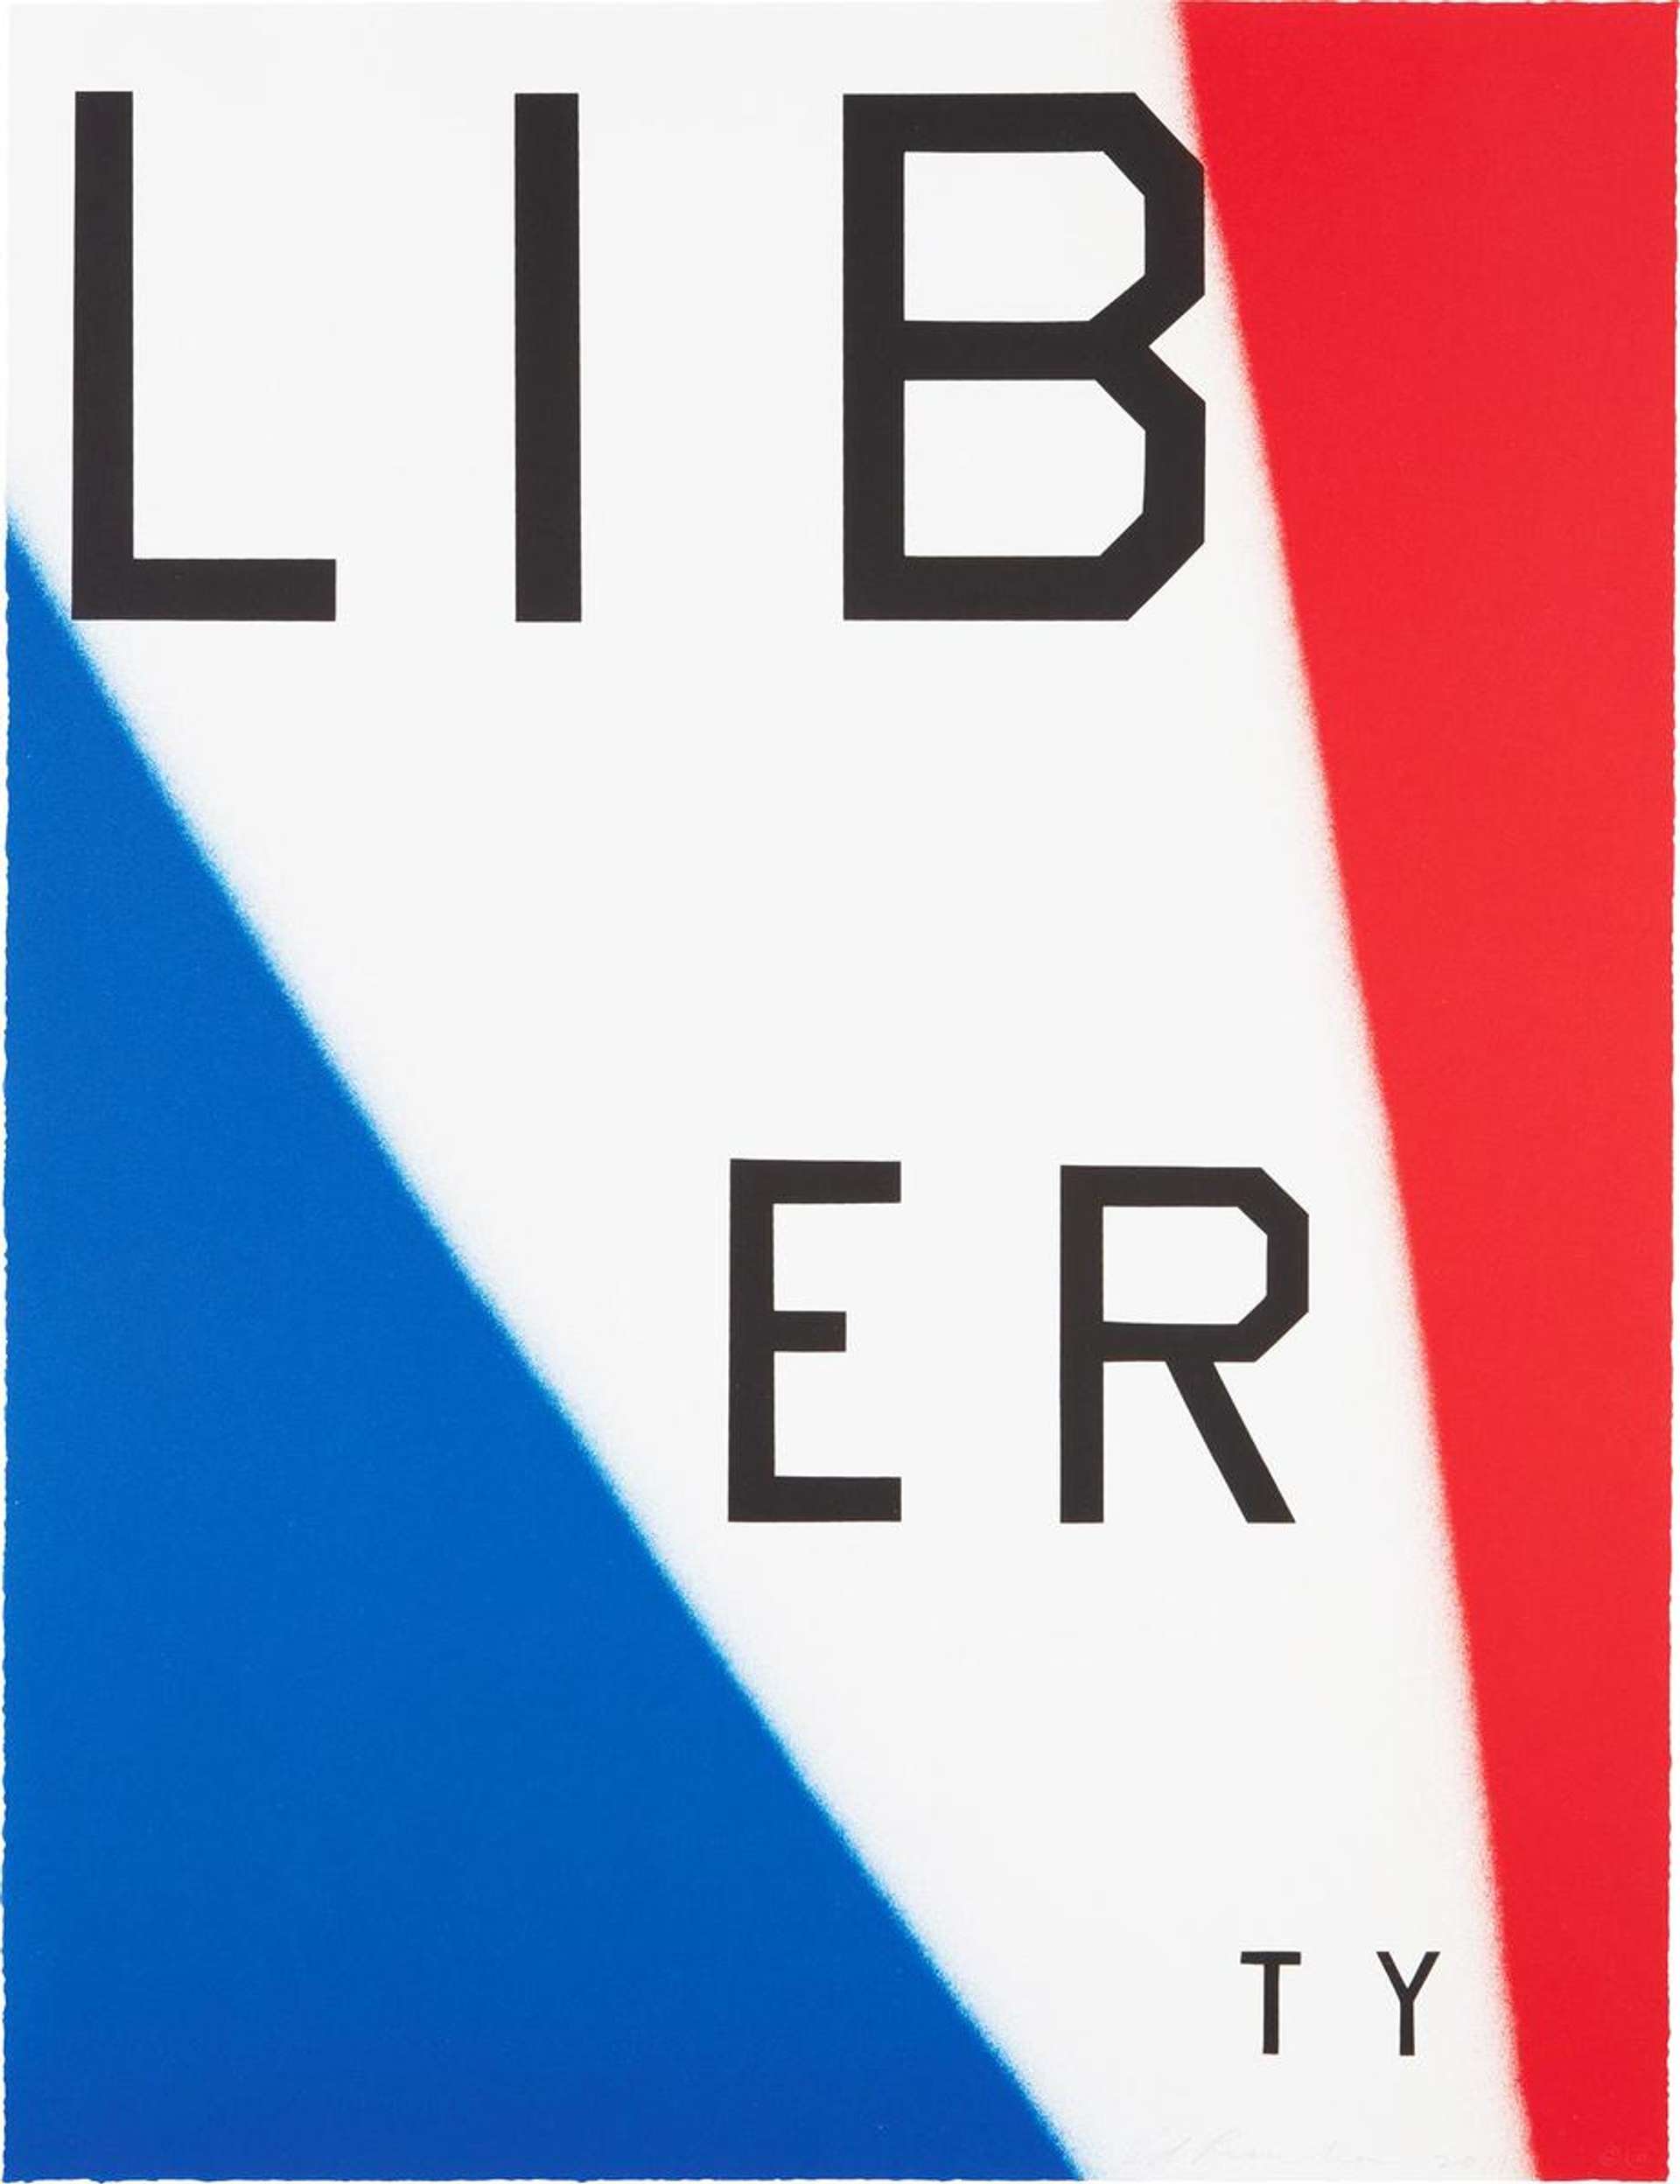 Ed Ruscha: Liberty - Signed Print